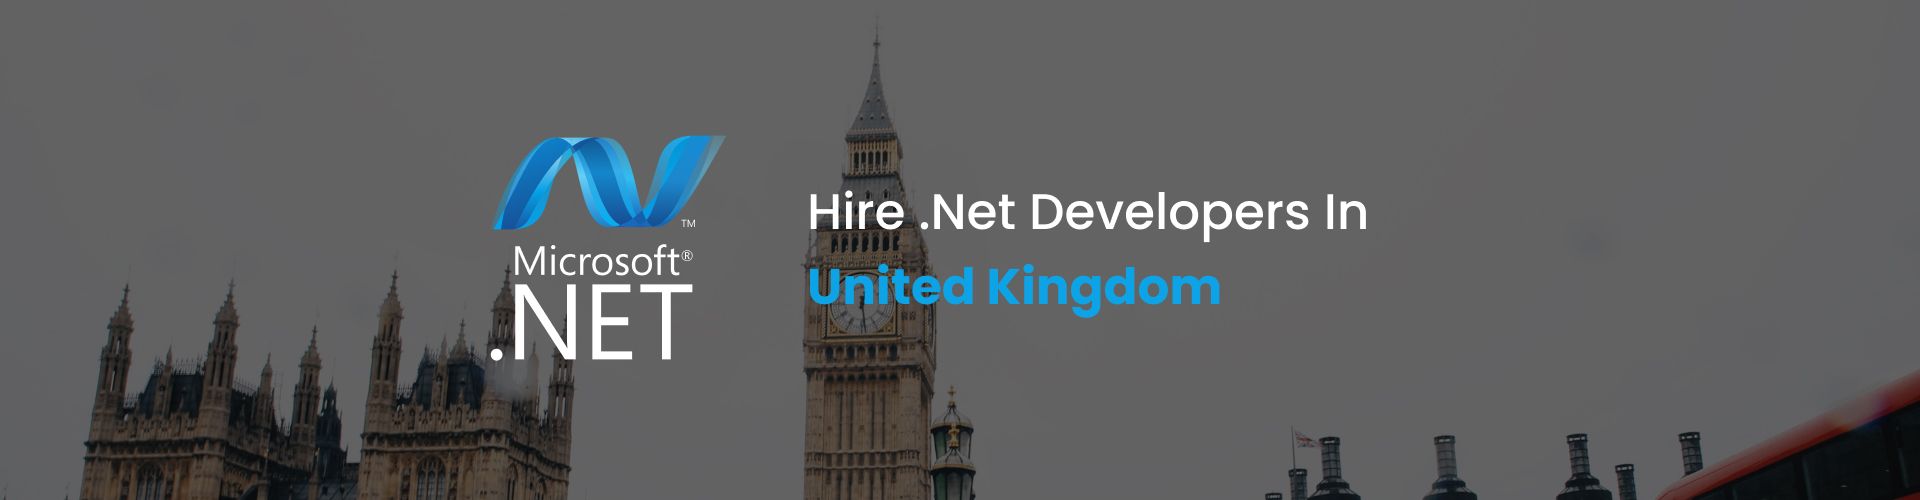 hire dot net developers in united kingdom